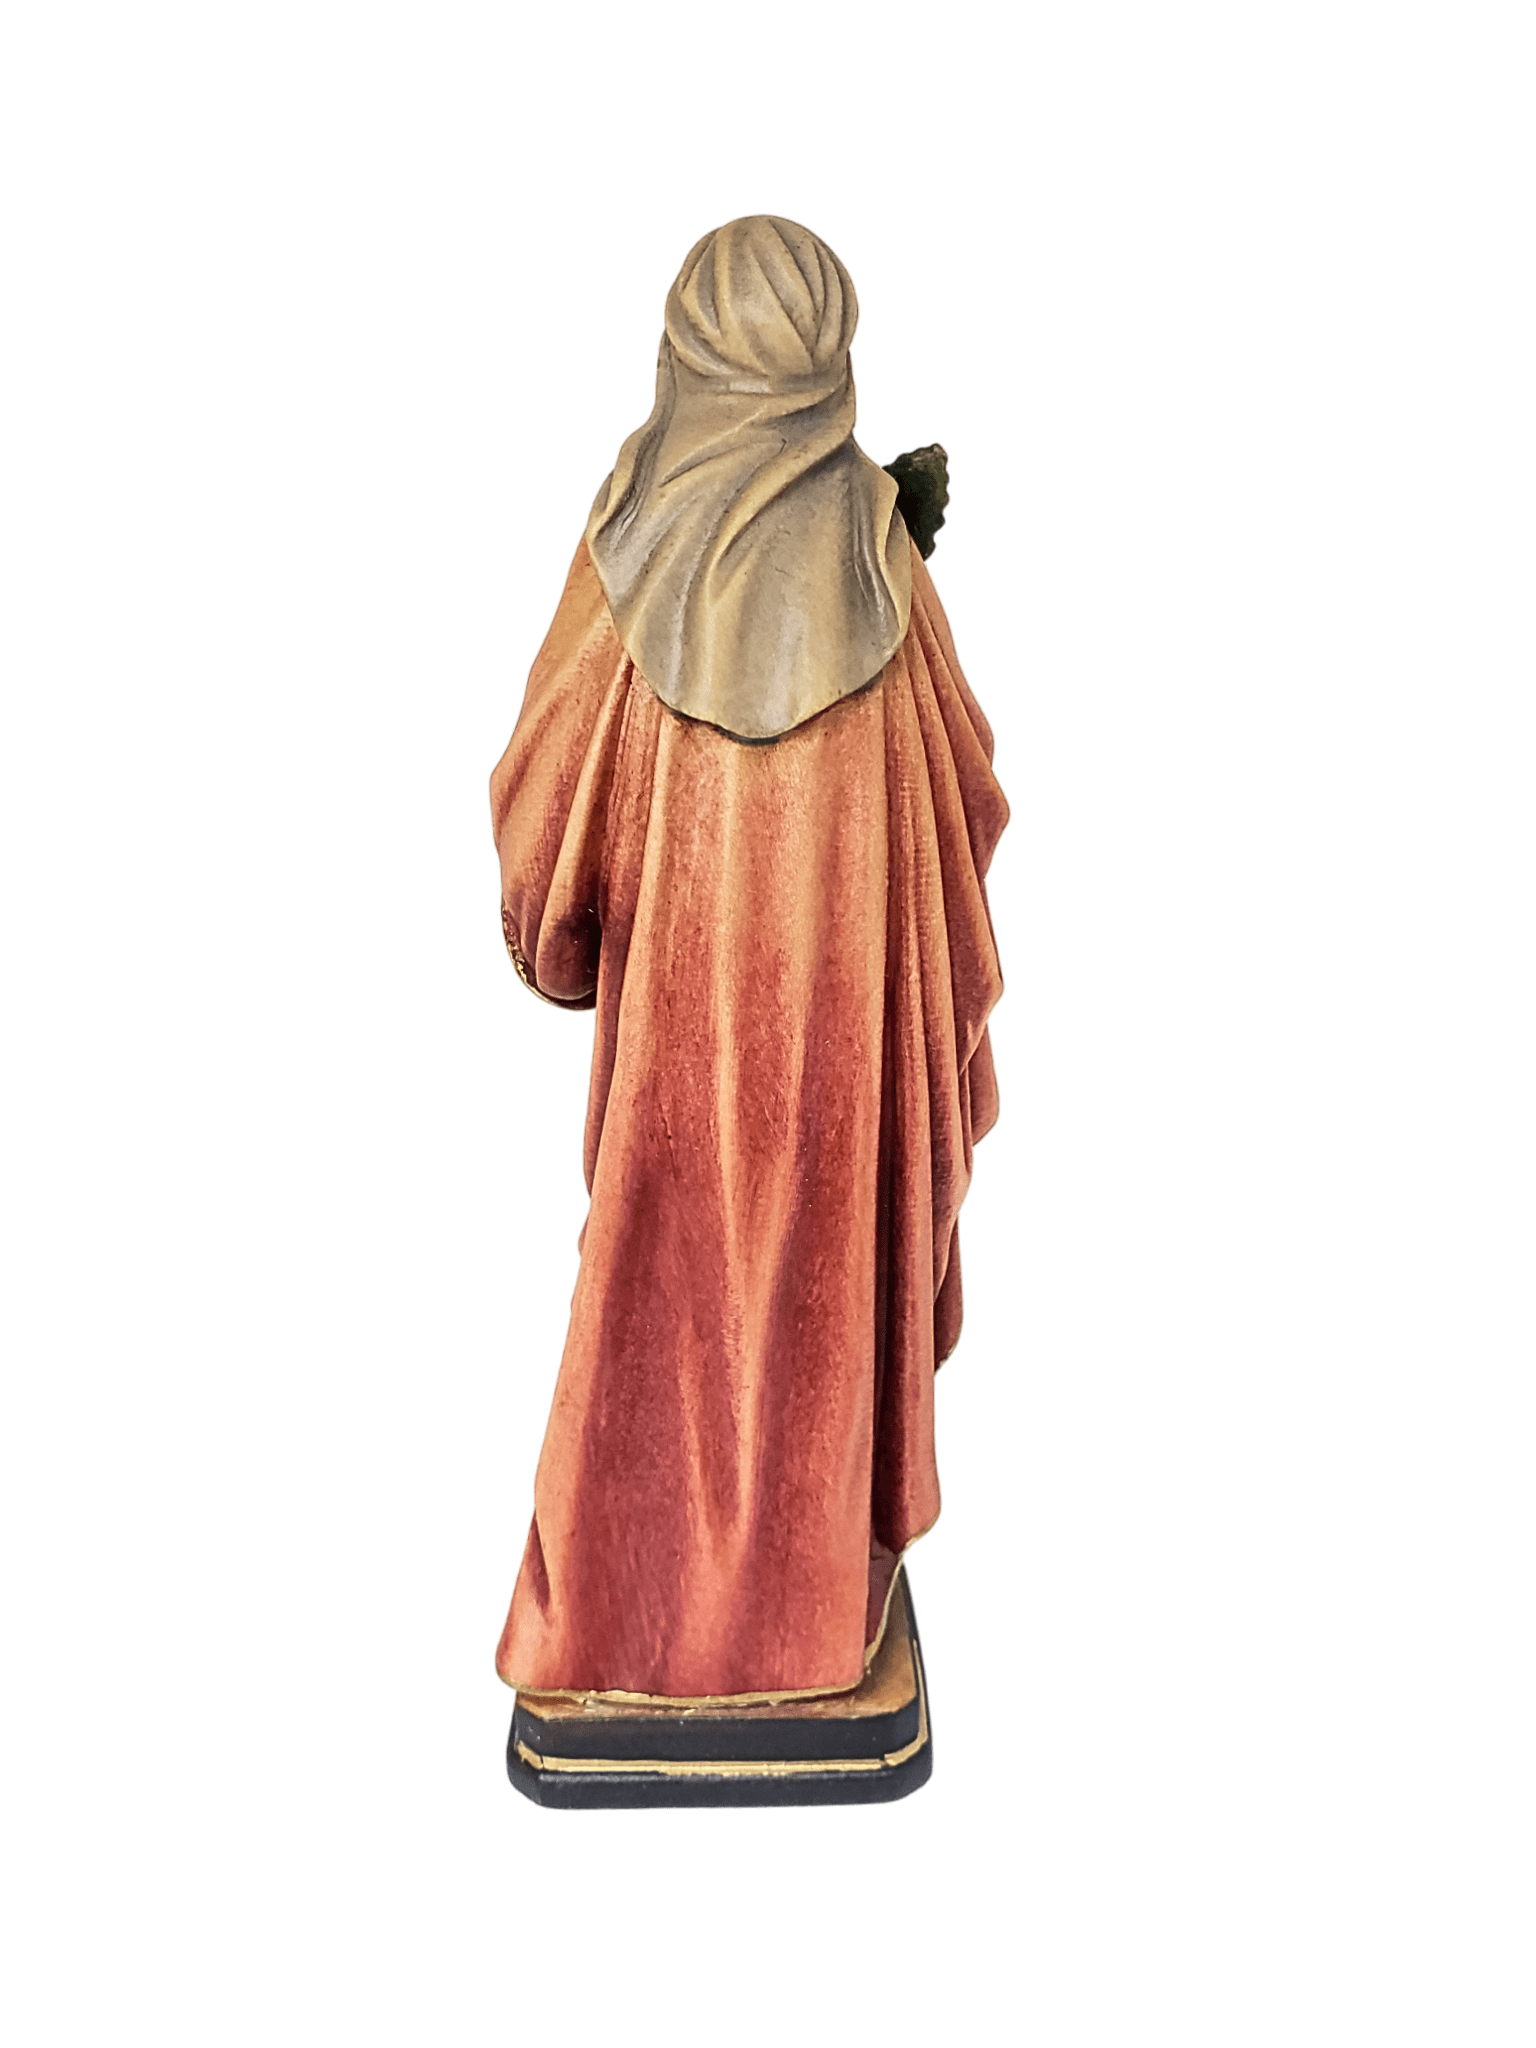 Imagem Italiana em Madeira Santa Sophia 15 cm-TerraCotta Arte Sacra